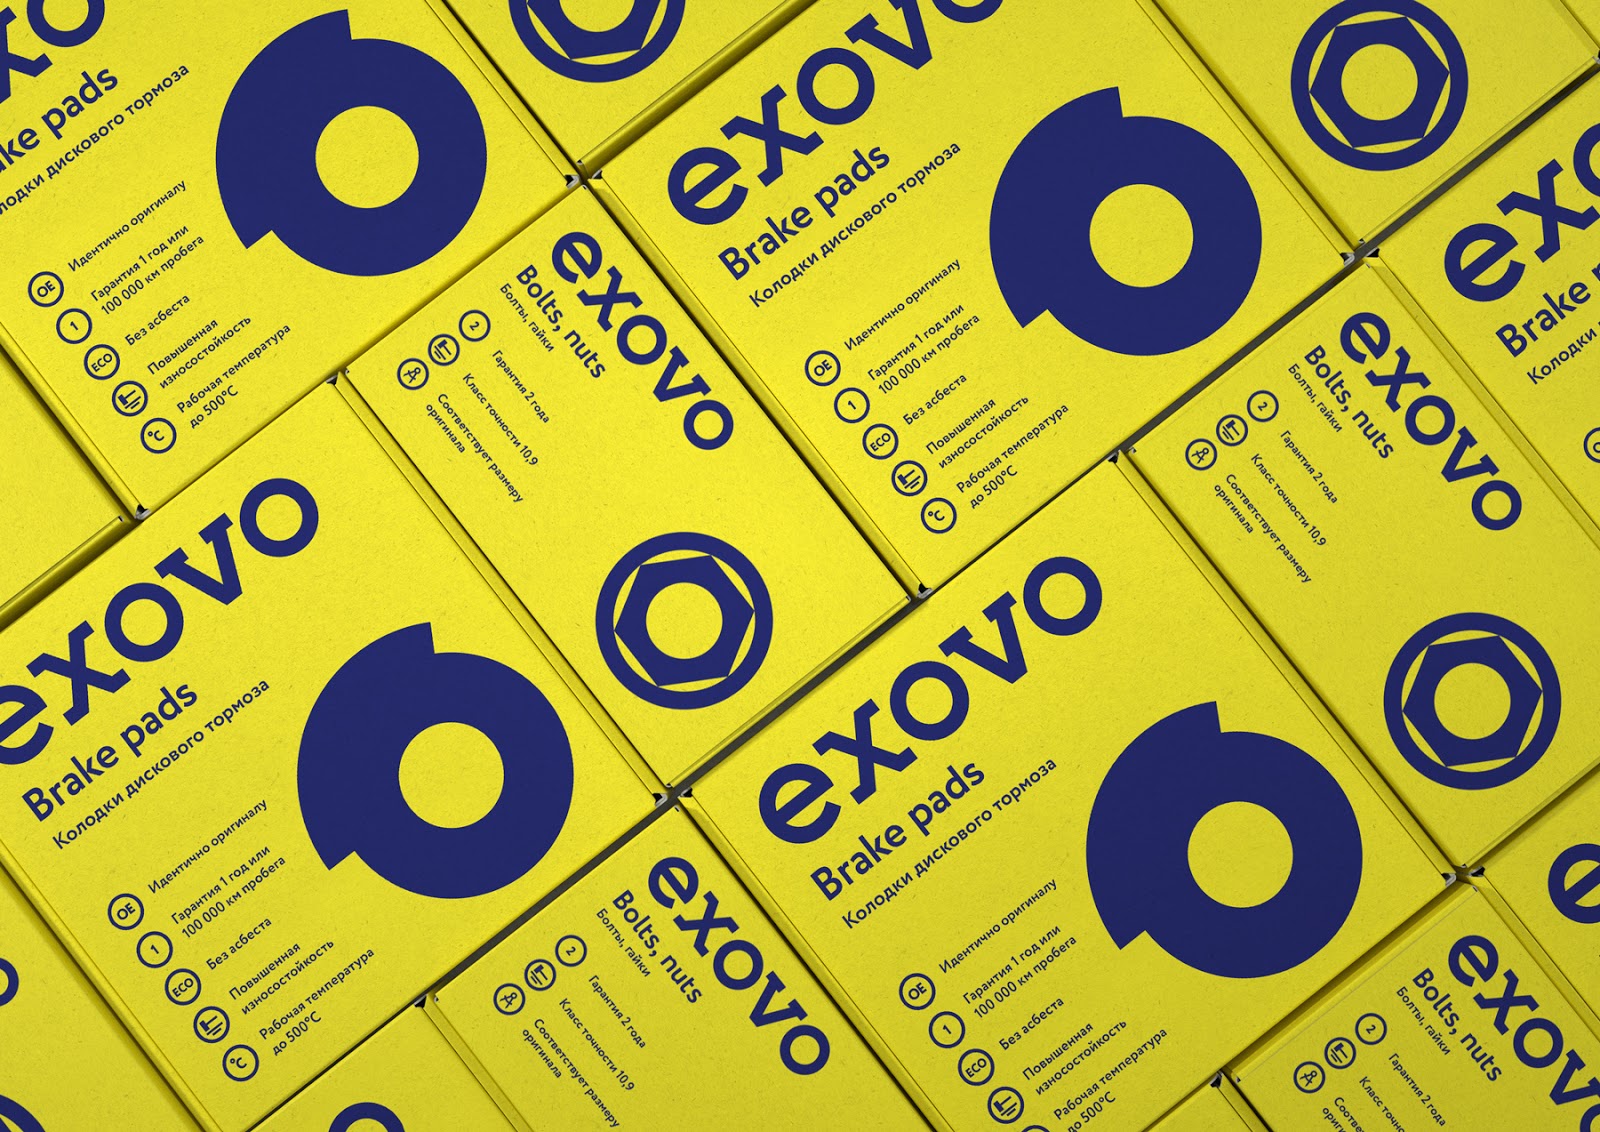 Exovo汽车配件包装设计